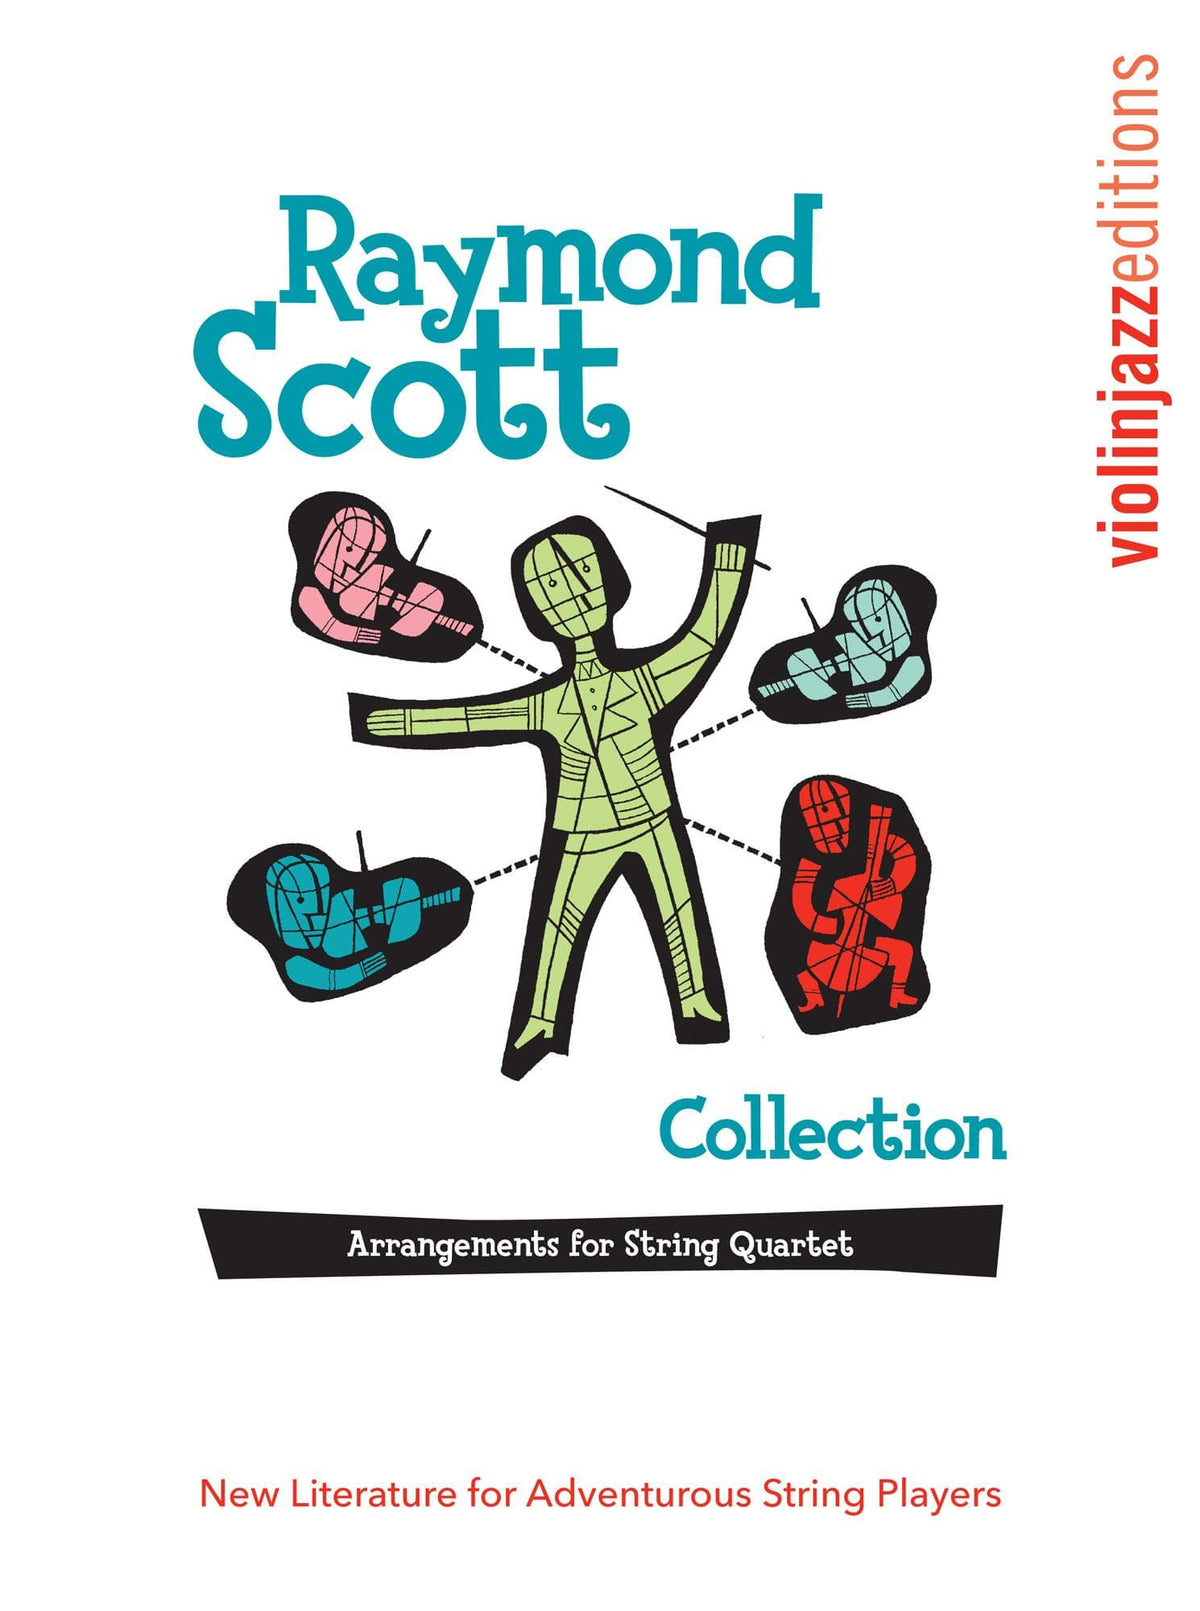 Scott, Raymond - Siberian Sleigh Ride - Raymond Scott Collection - for String Quartet - arranged by Jeremy Cohen - Violinjazz Editions